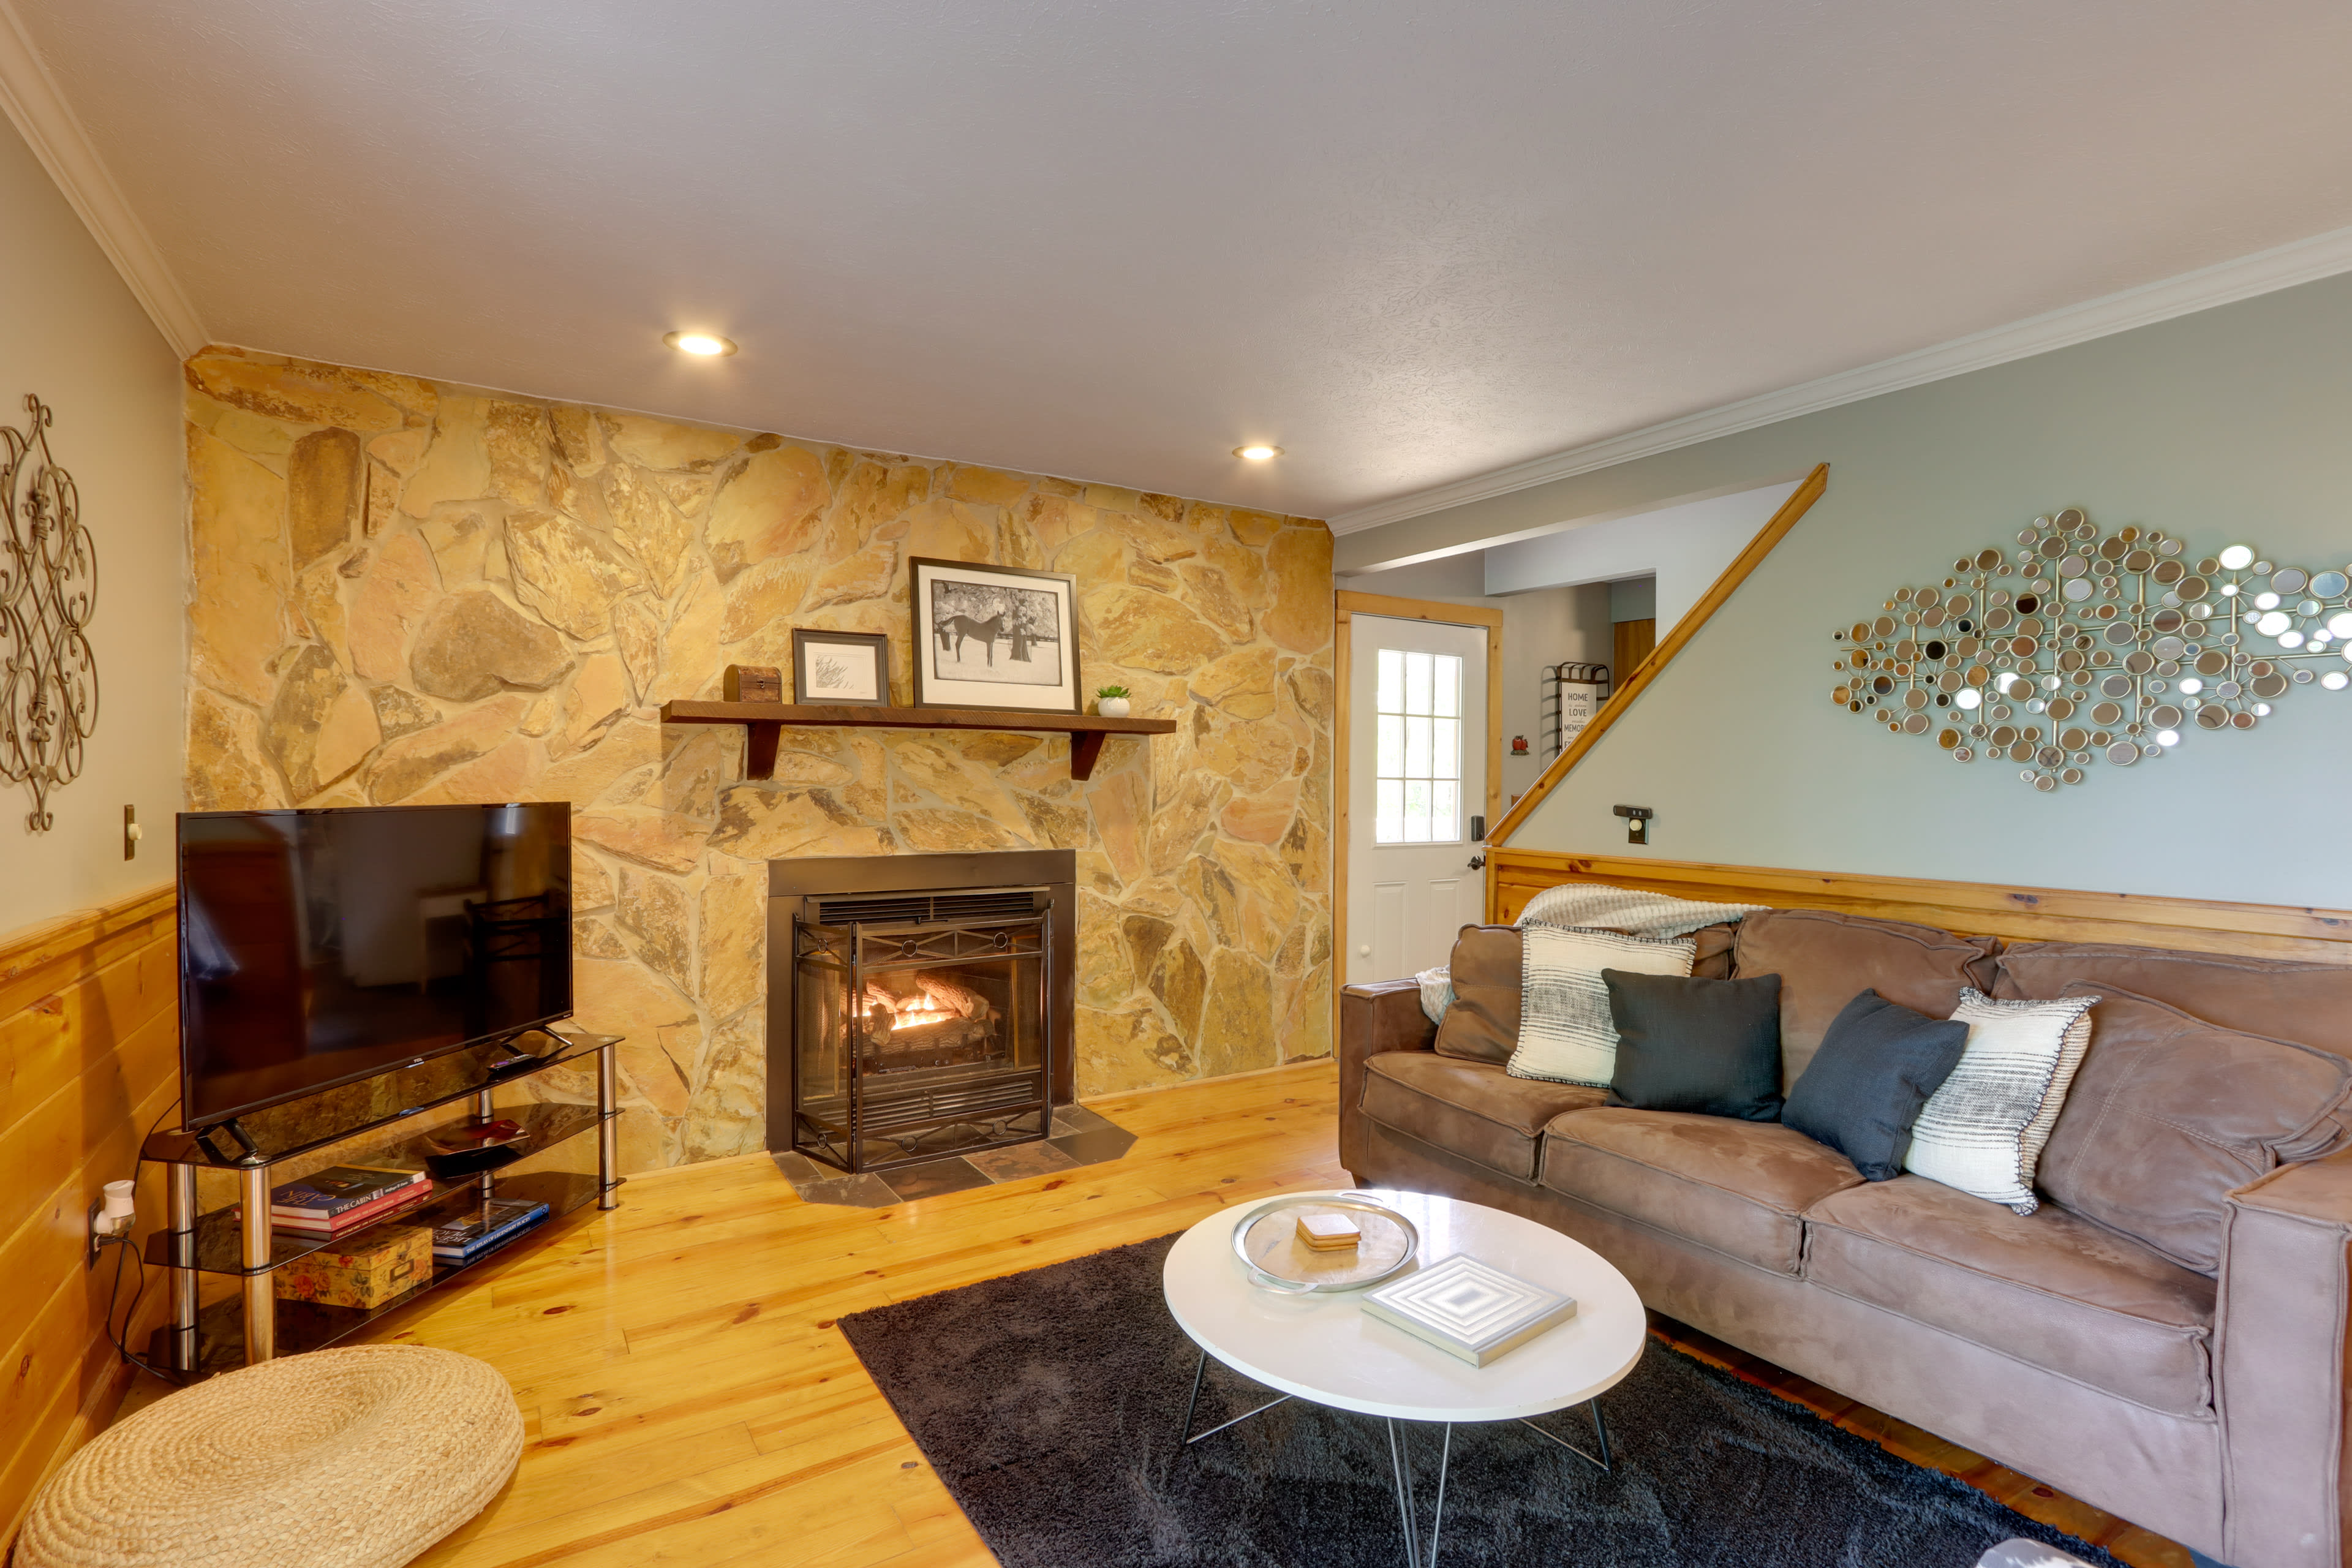 Living Room | Smart TV | Rustic-Chic Interior | Wood-Burning Fireplace